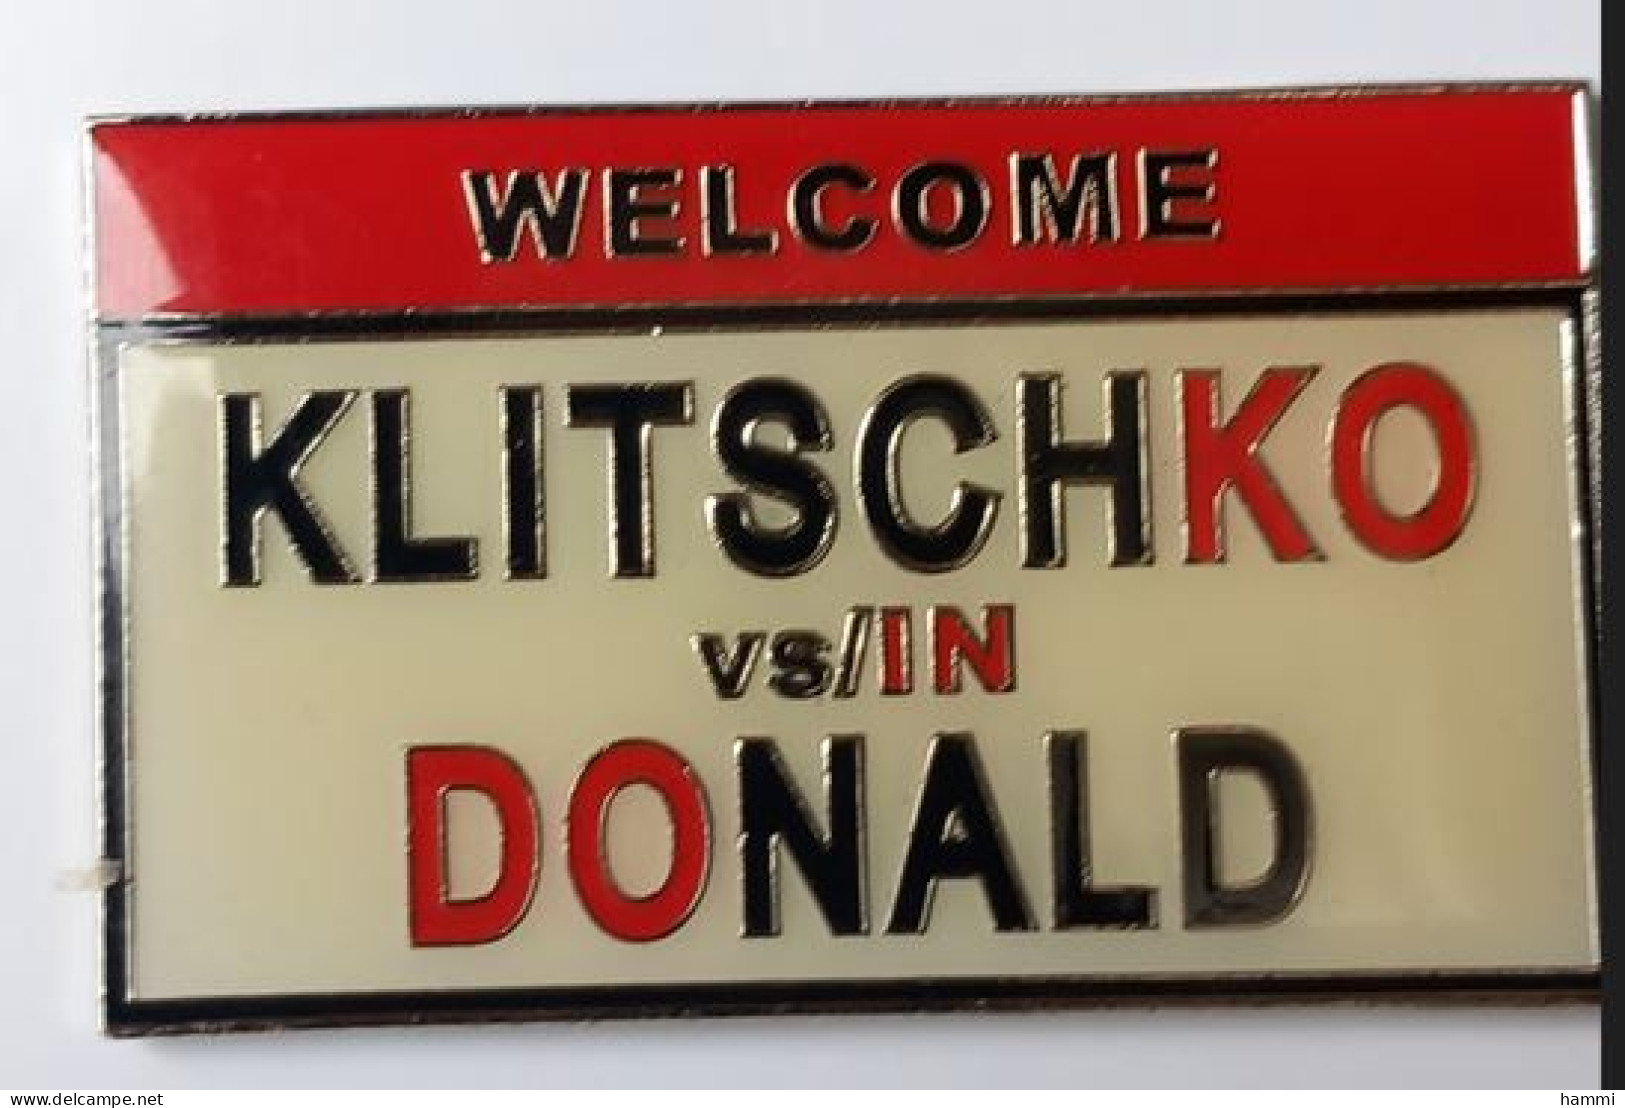 UU224 Pin's Welcome Klitschko Vs/in Donald Politique Maire De Kiev Et Donald Trump ? Achat Immédiat - McDonald's